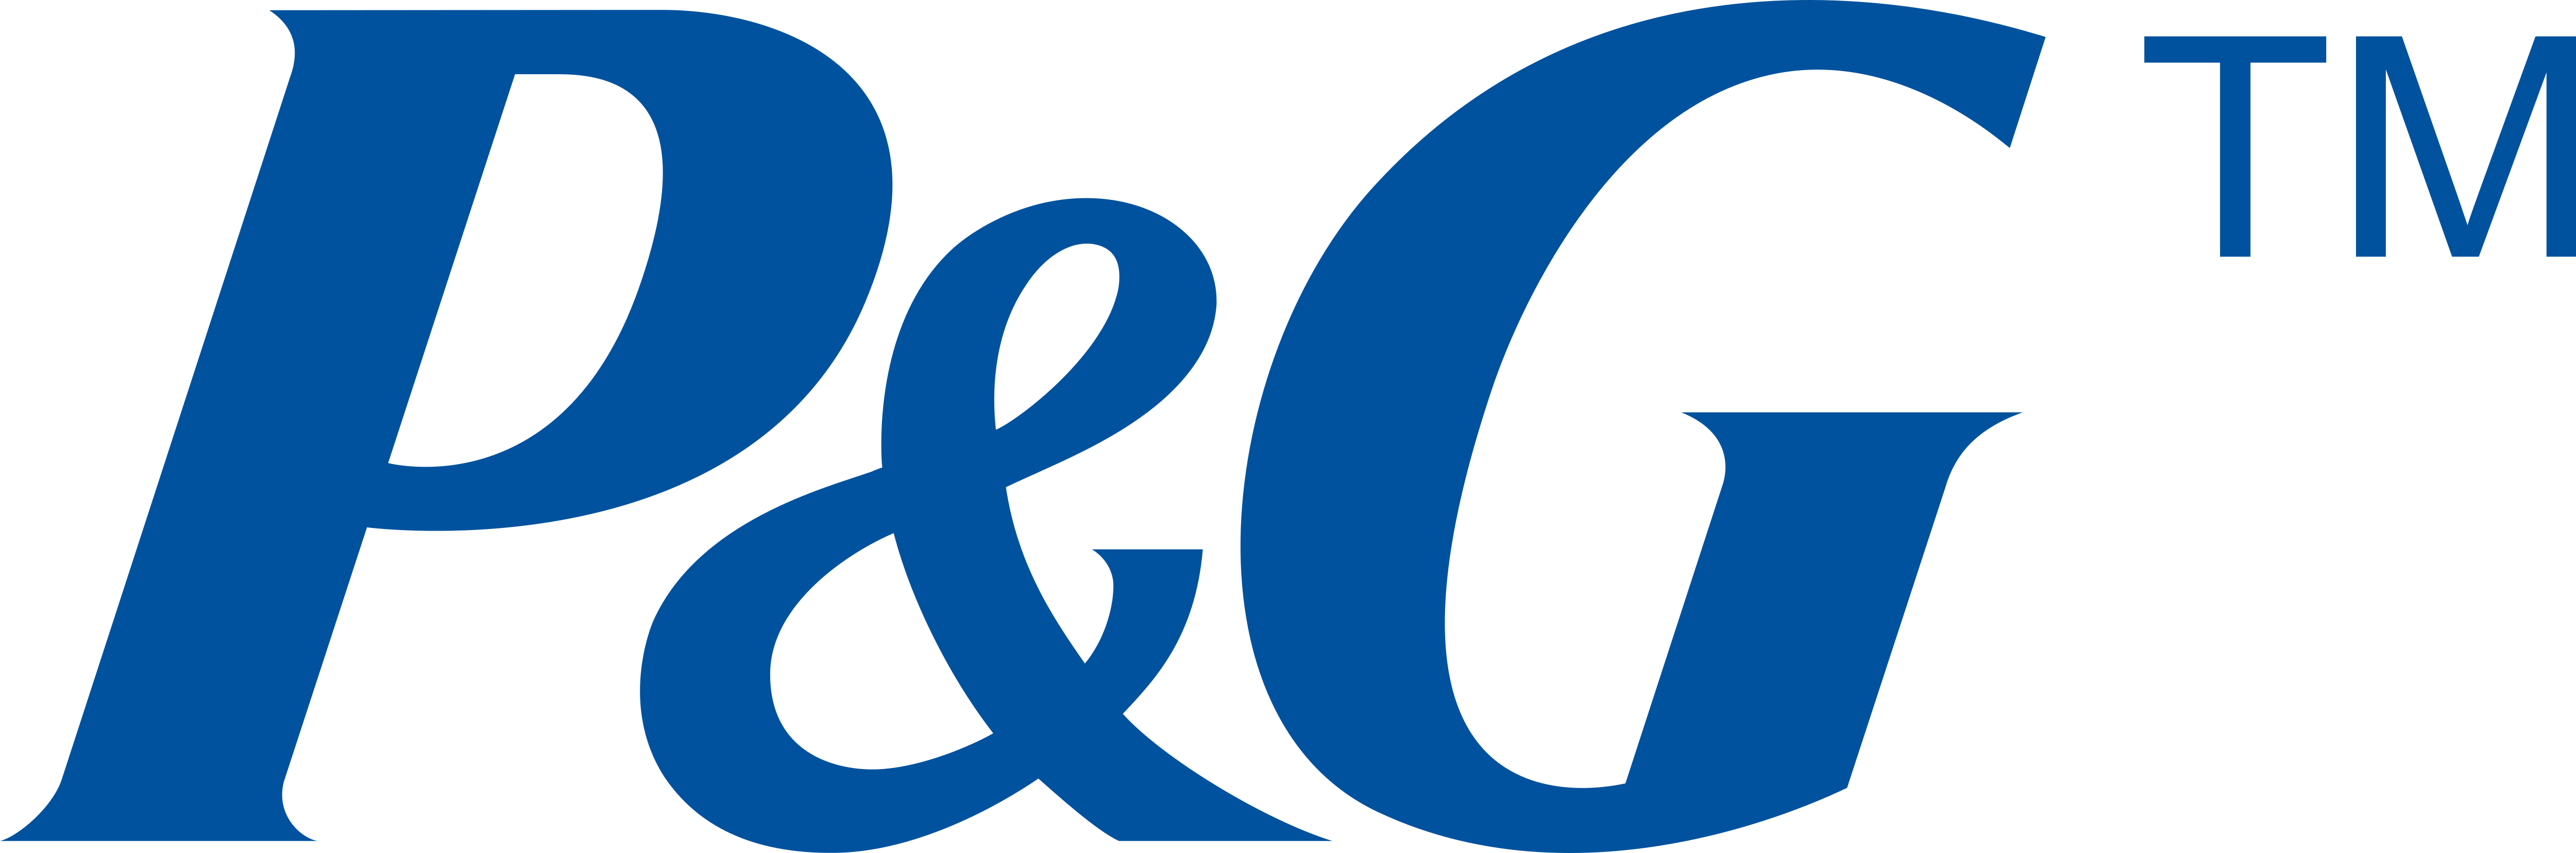 Procter And Gamble Company Logo